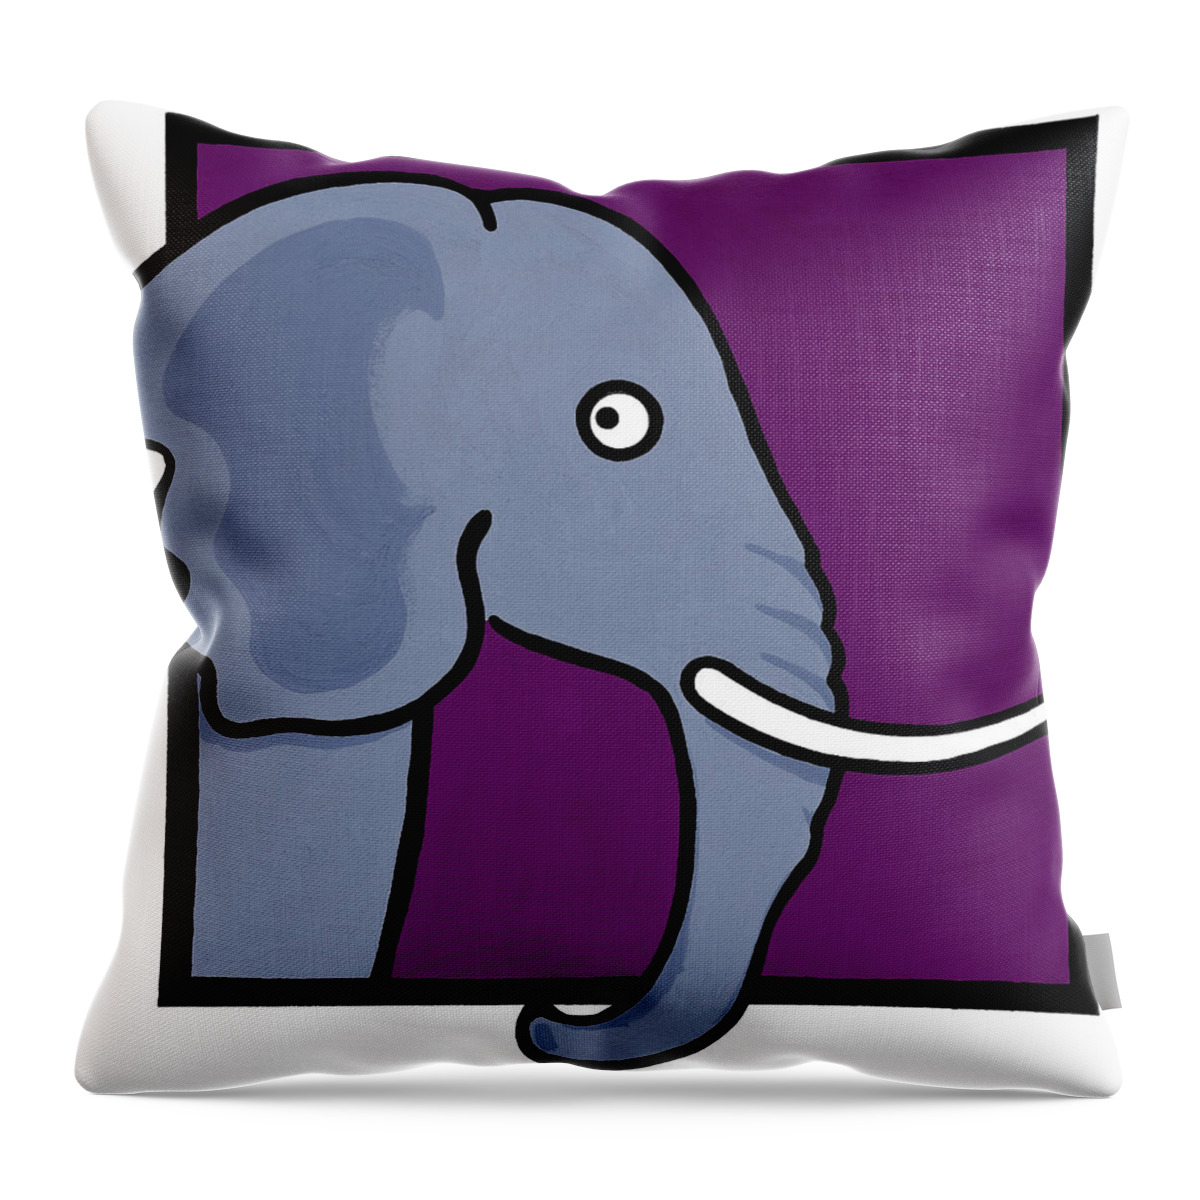 Gouache Throw Pillow featuring the digital art Elephant by Donna Ikkanda